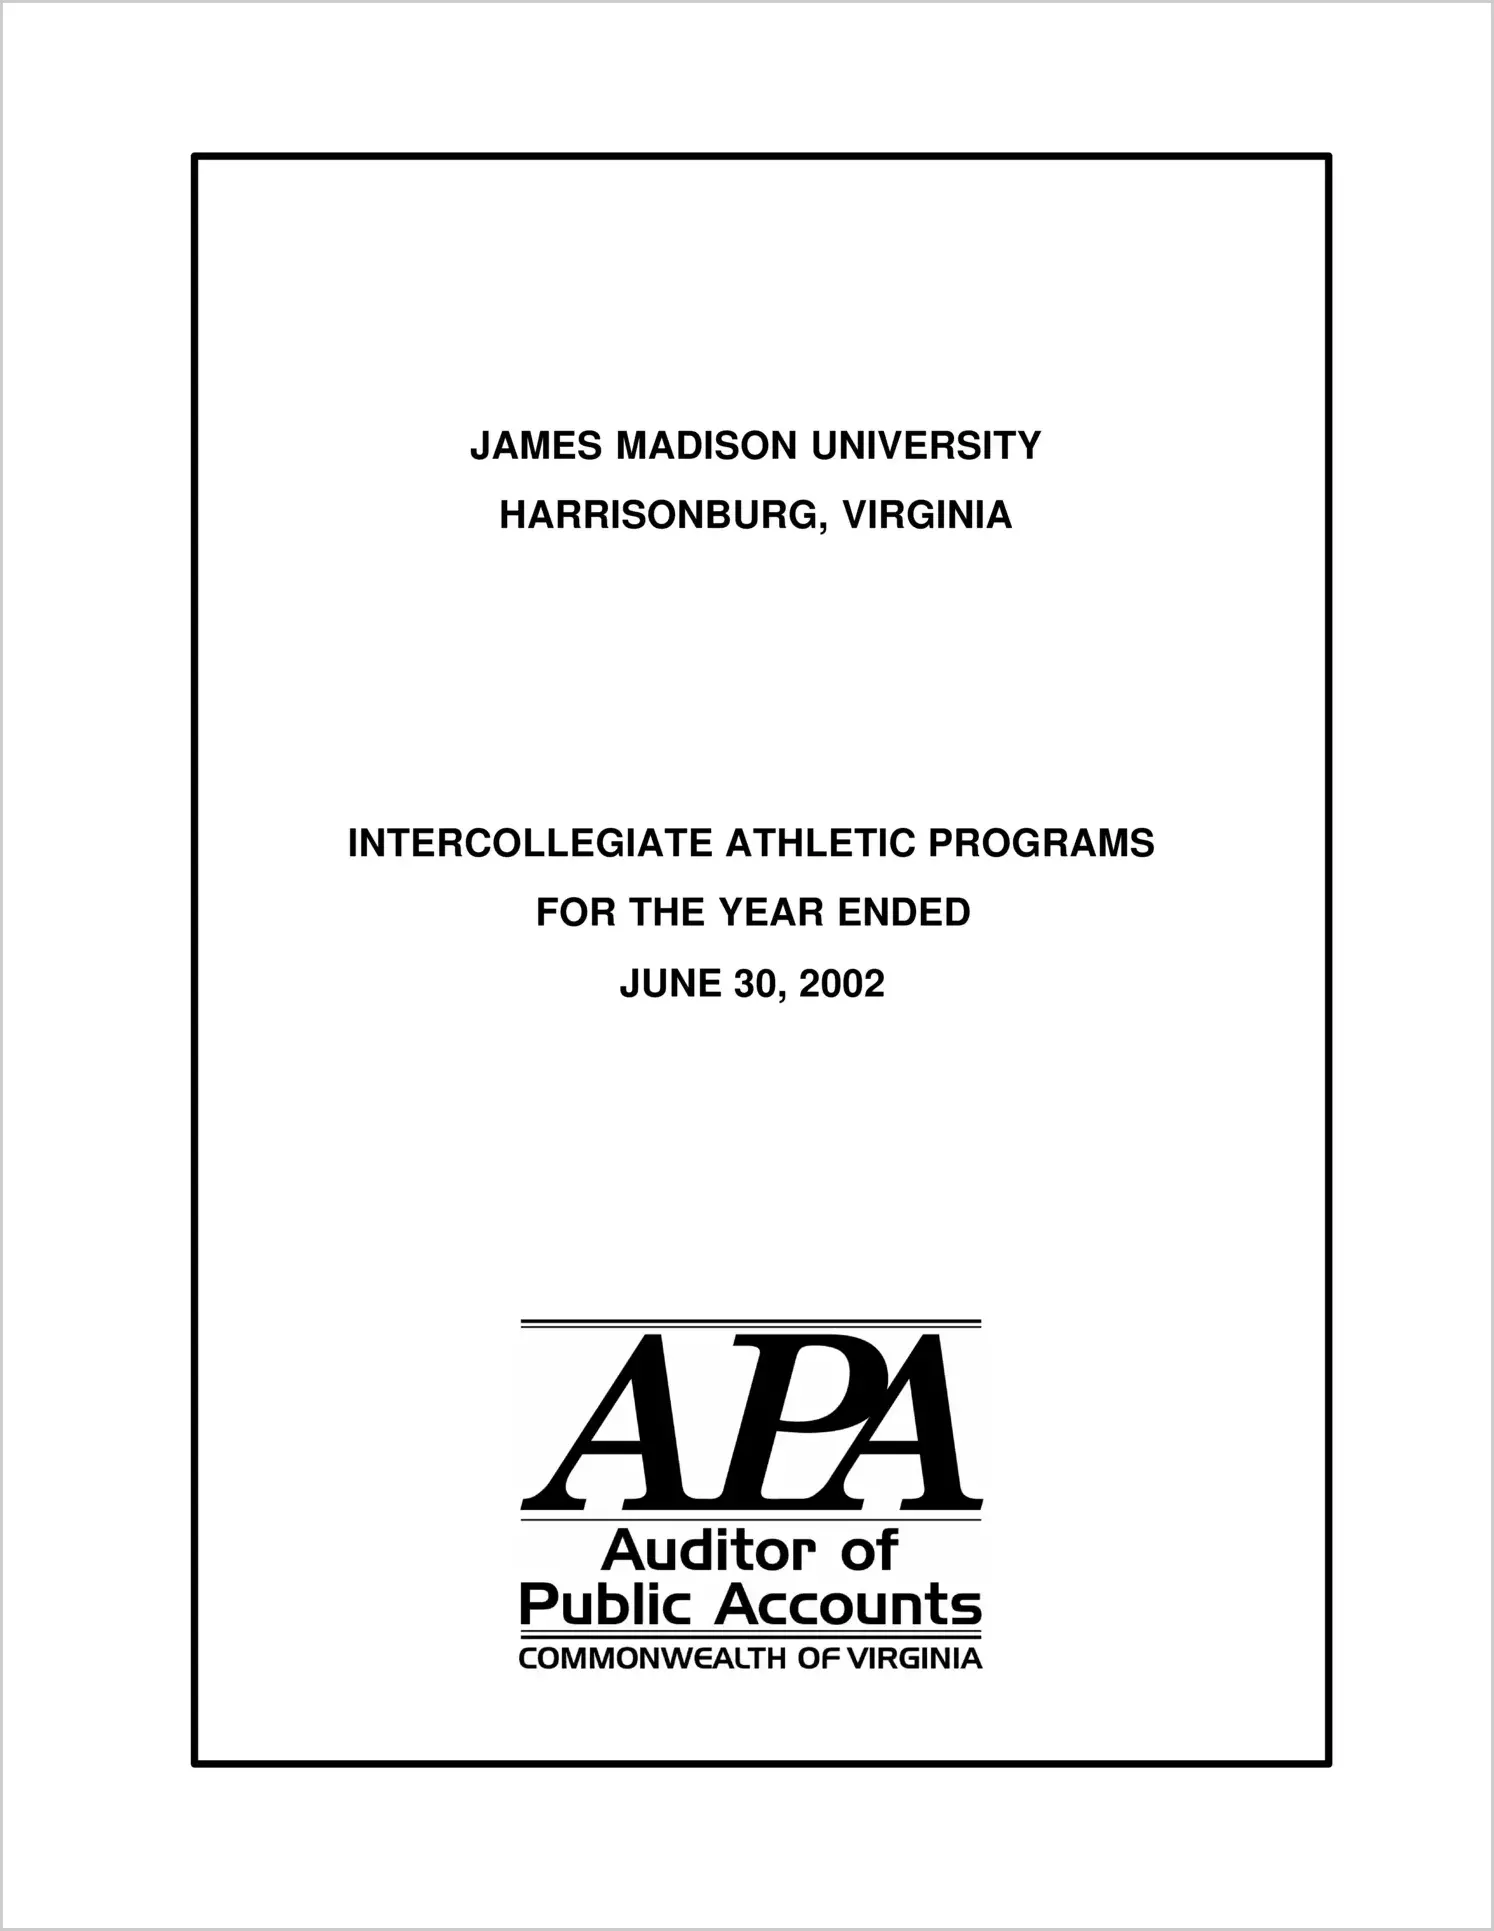 James Madison University Intercollegiate Athletic Programs for the year ended June 30, 2002